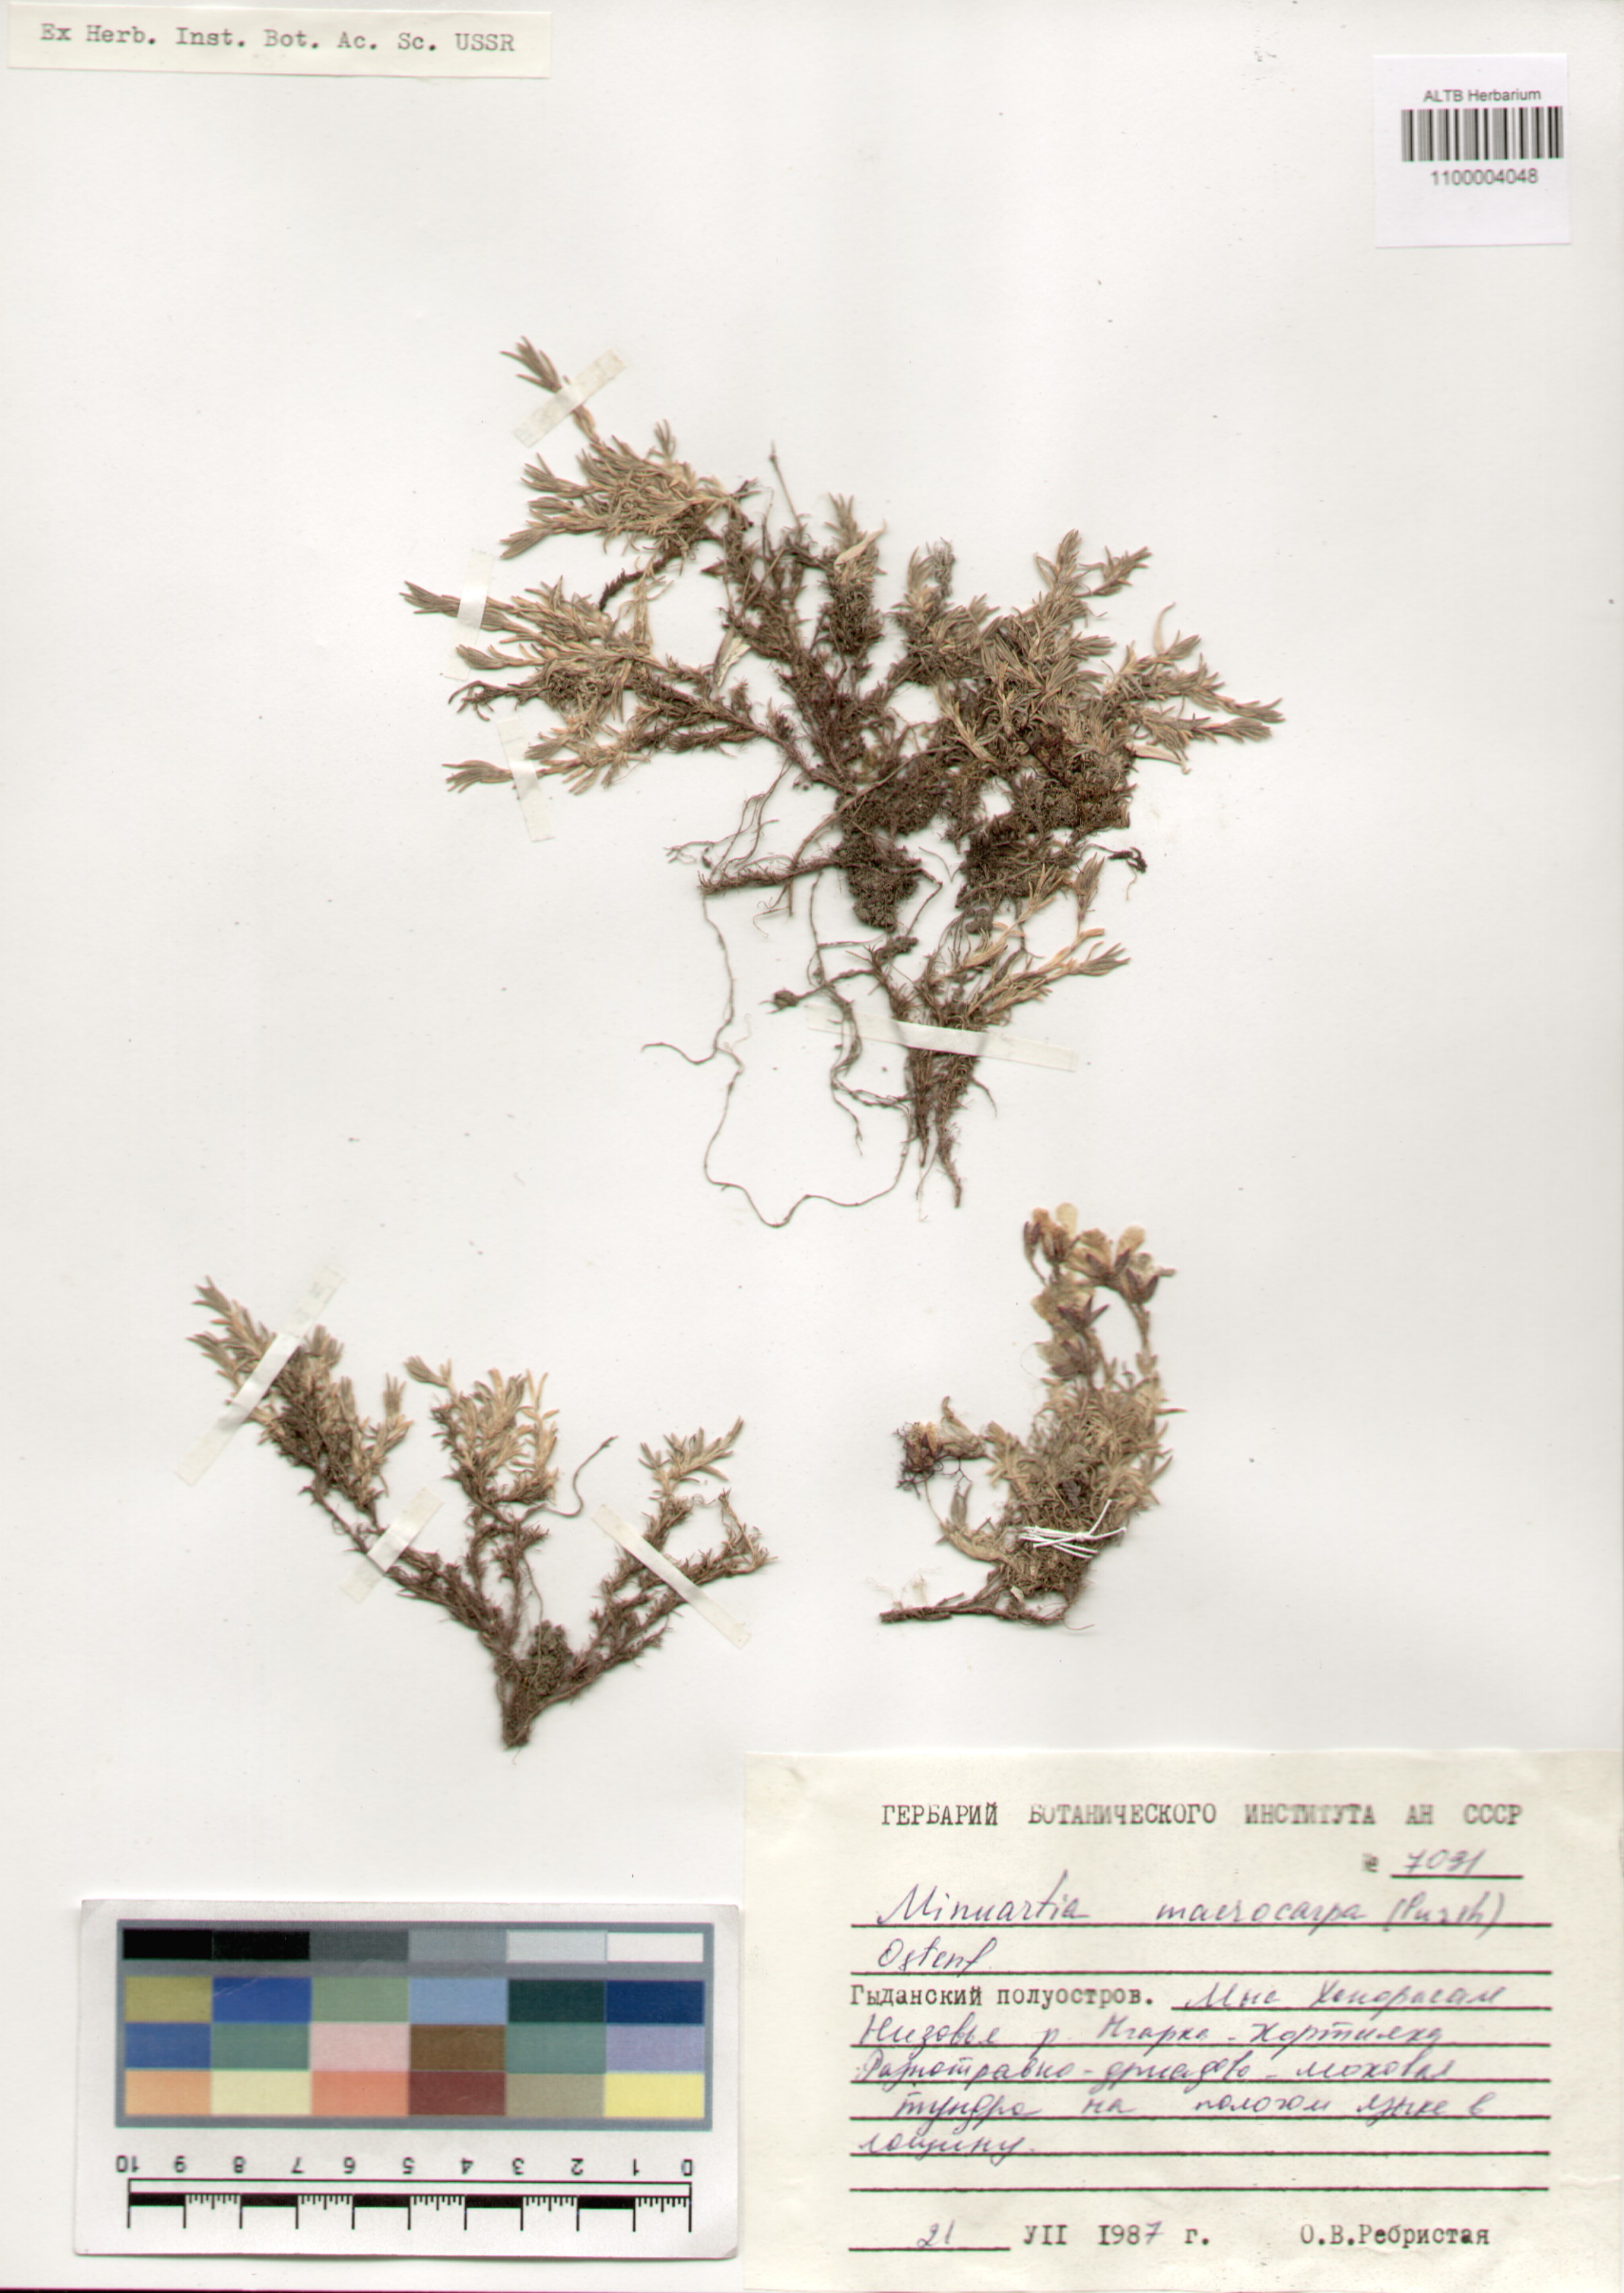 Caryophyllaceae,Minuartia macrocarpa (Pursh) Ostenf.